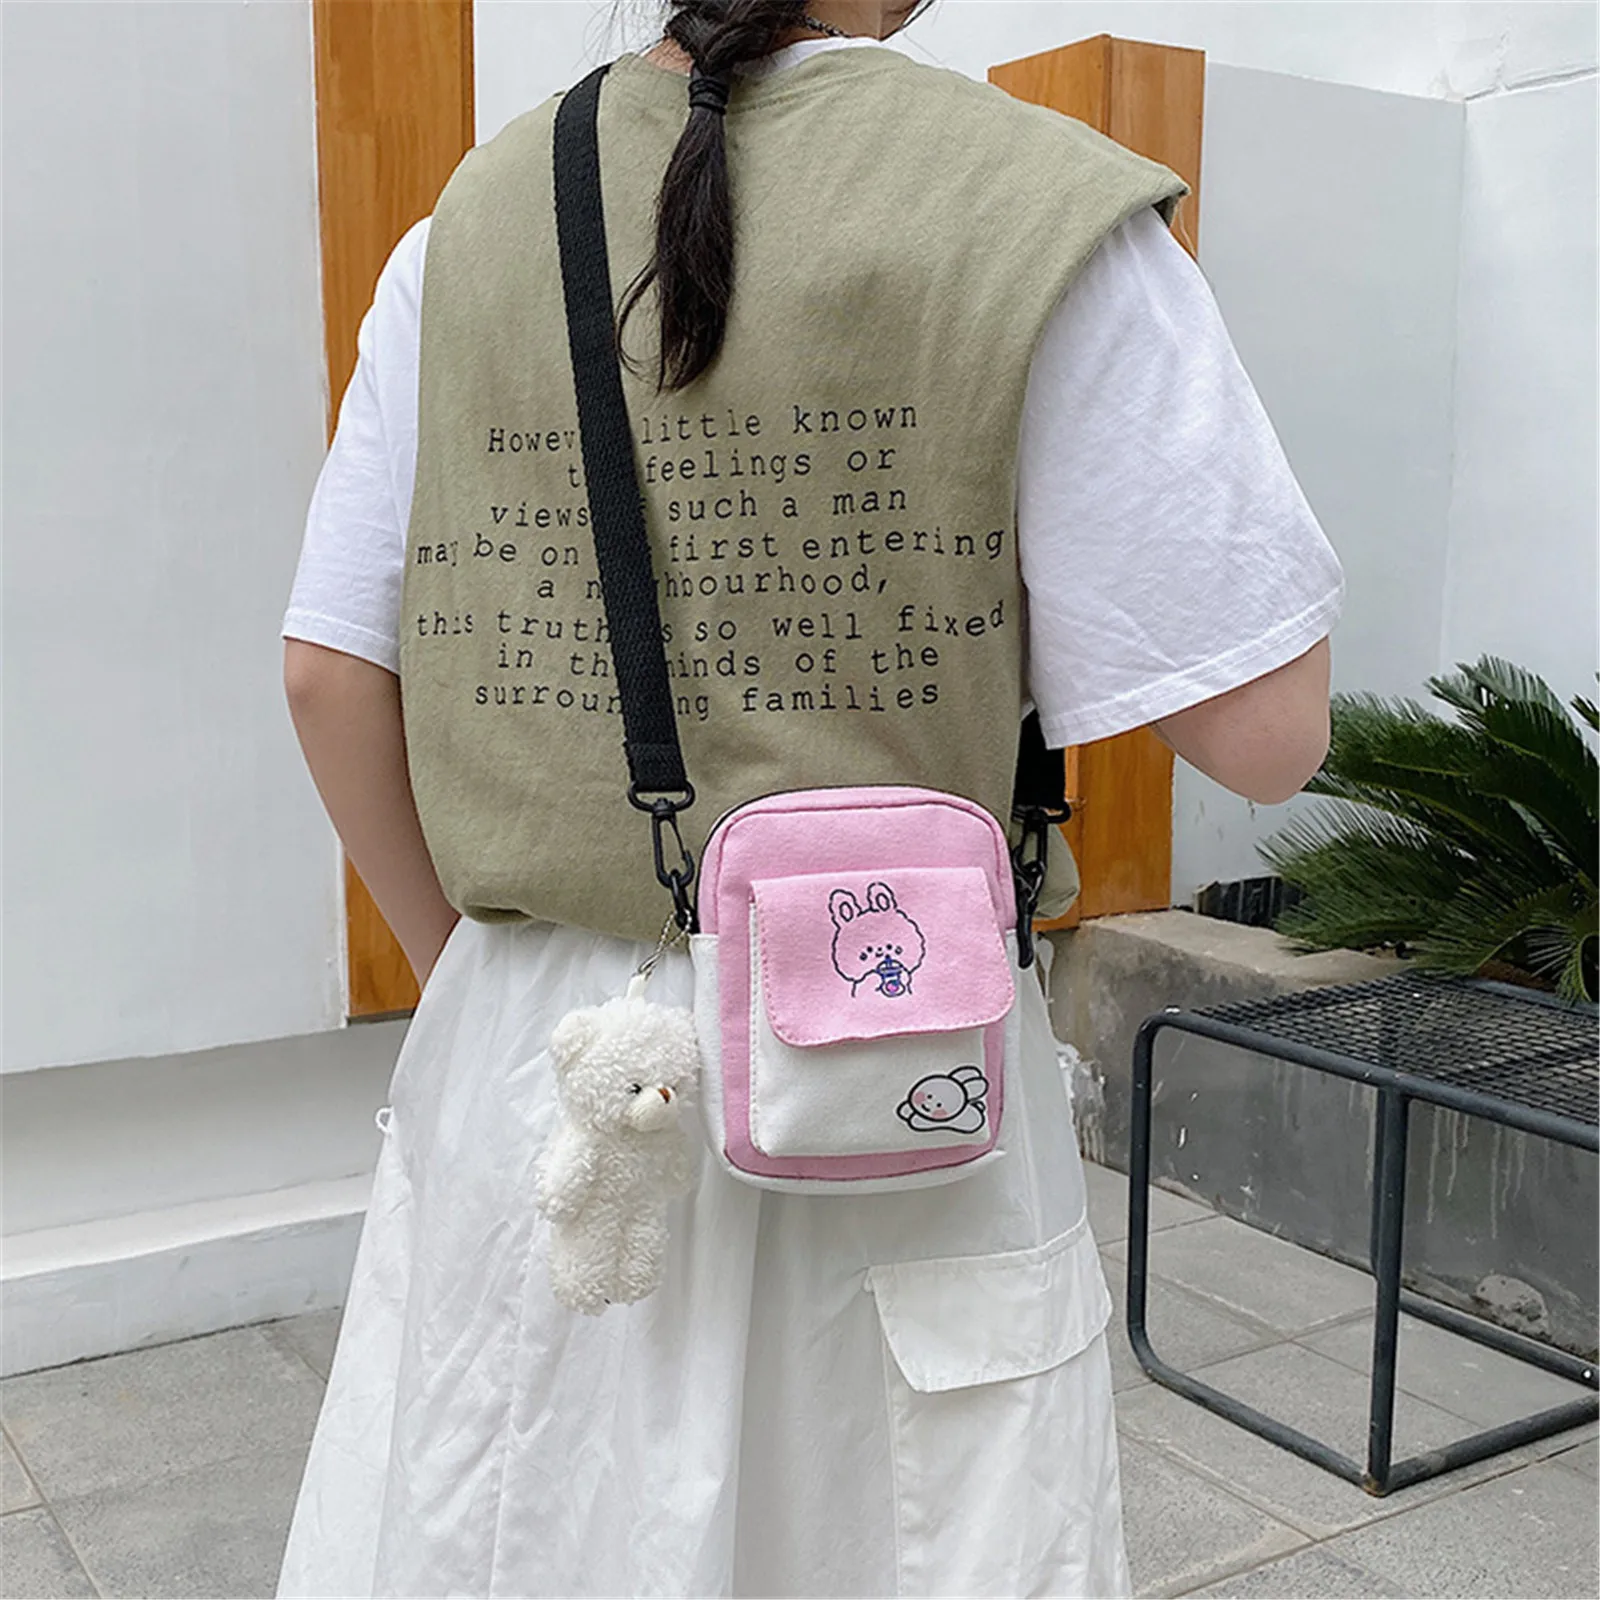 Canvas Shoulder Bag For Women Korean Fashion Messenger Bag Students Crossbody Bag Small Handbags With Pendant And Badge 2024